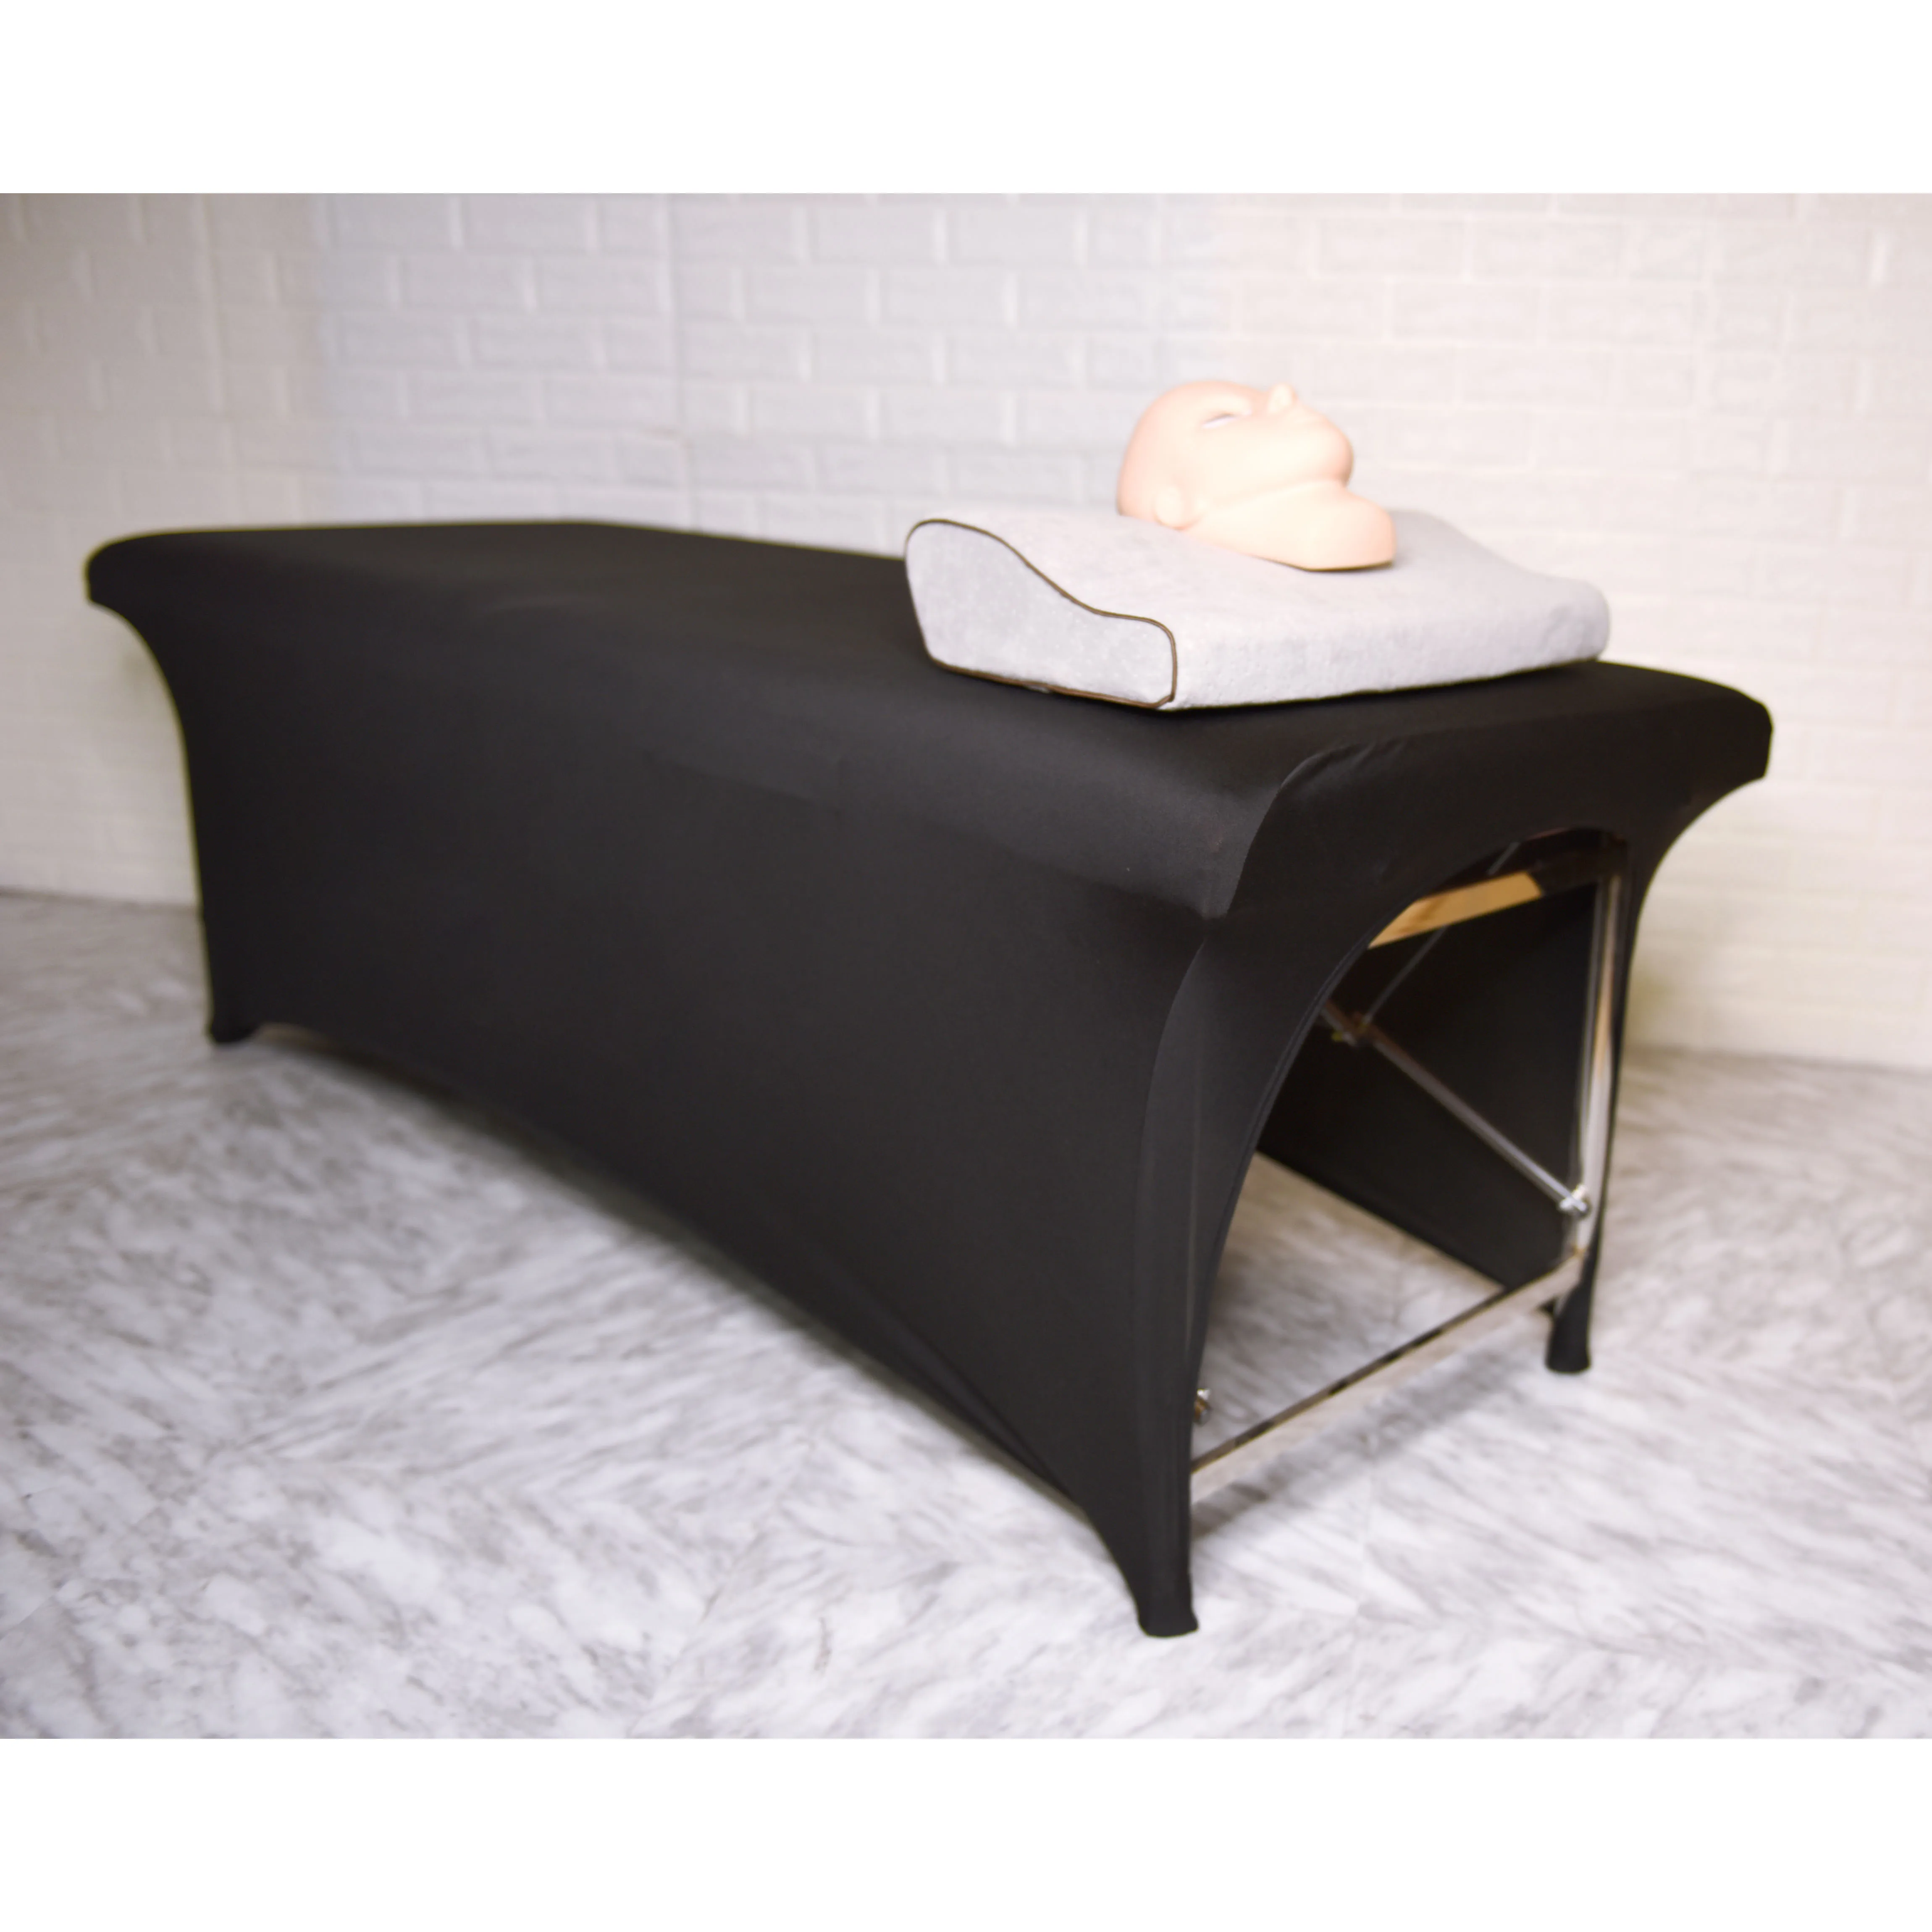 

LashPlus Black Spandex Bed Cover Stretch Lash Bed Cover Salon Massage Elastic Eyelash Extension Bed Cover